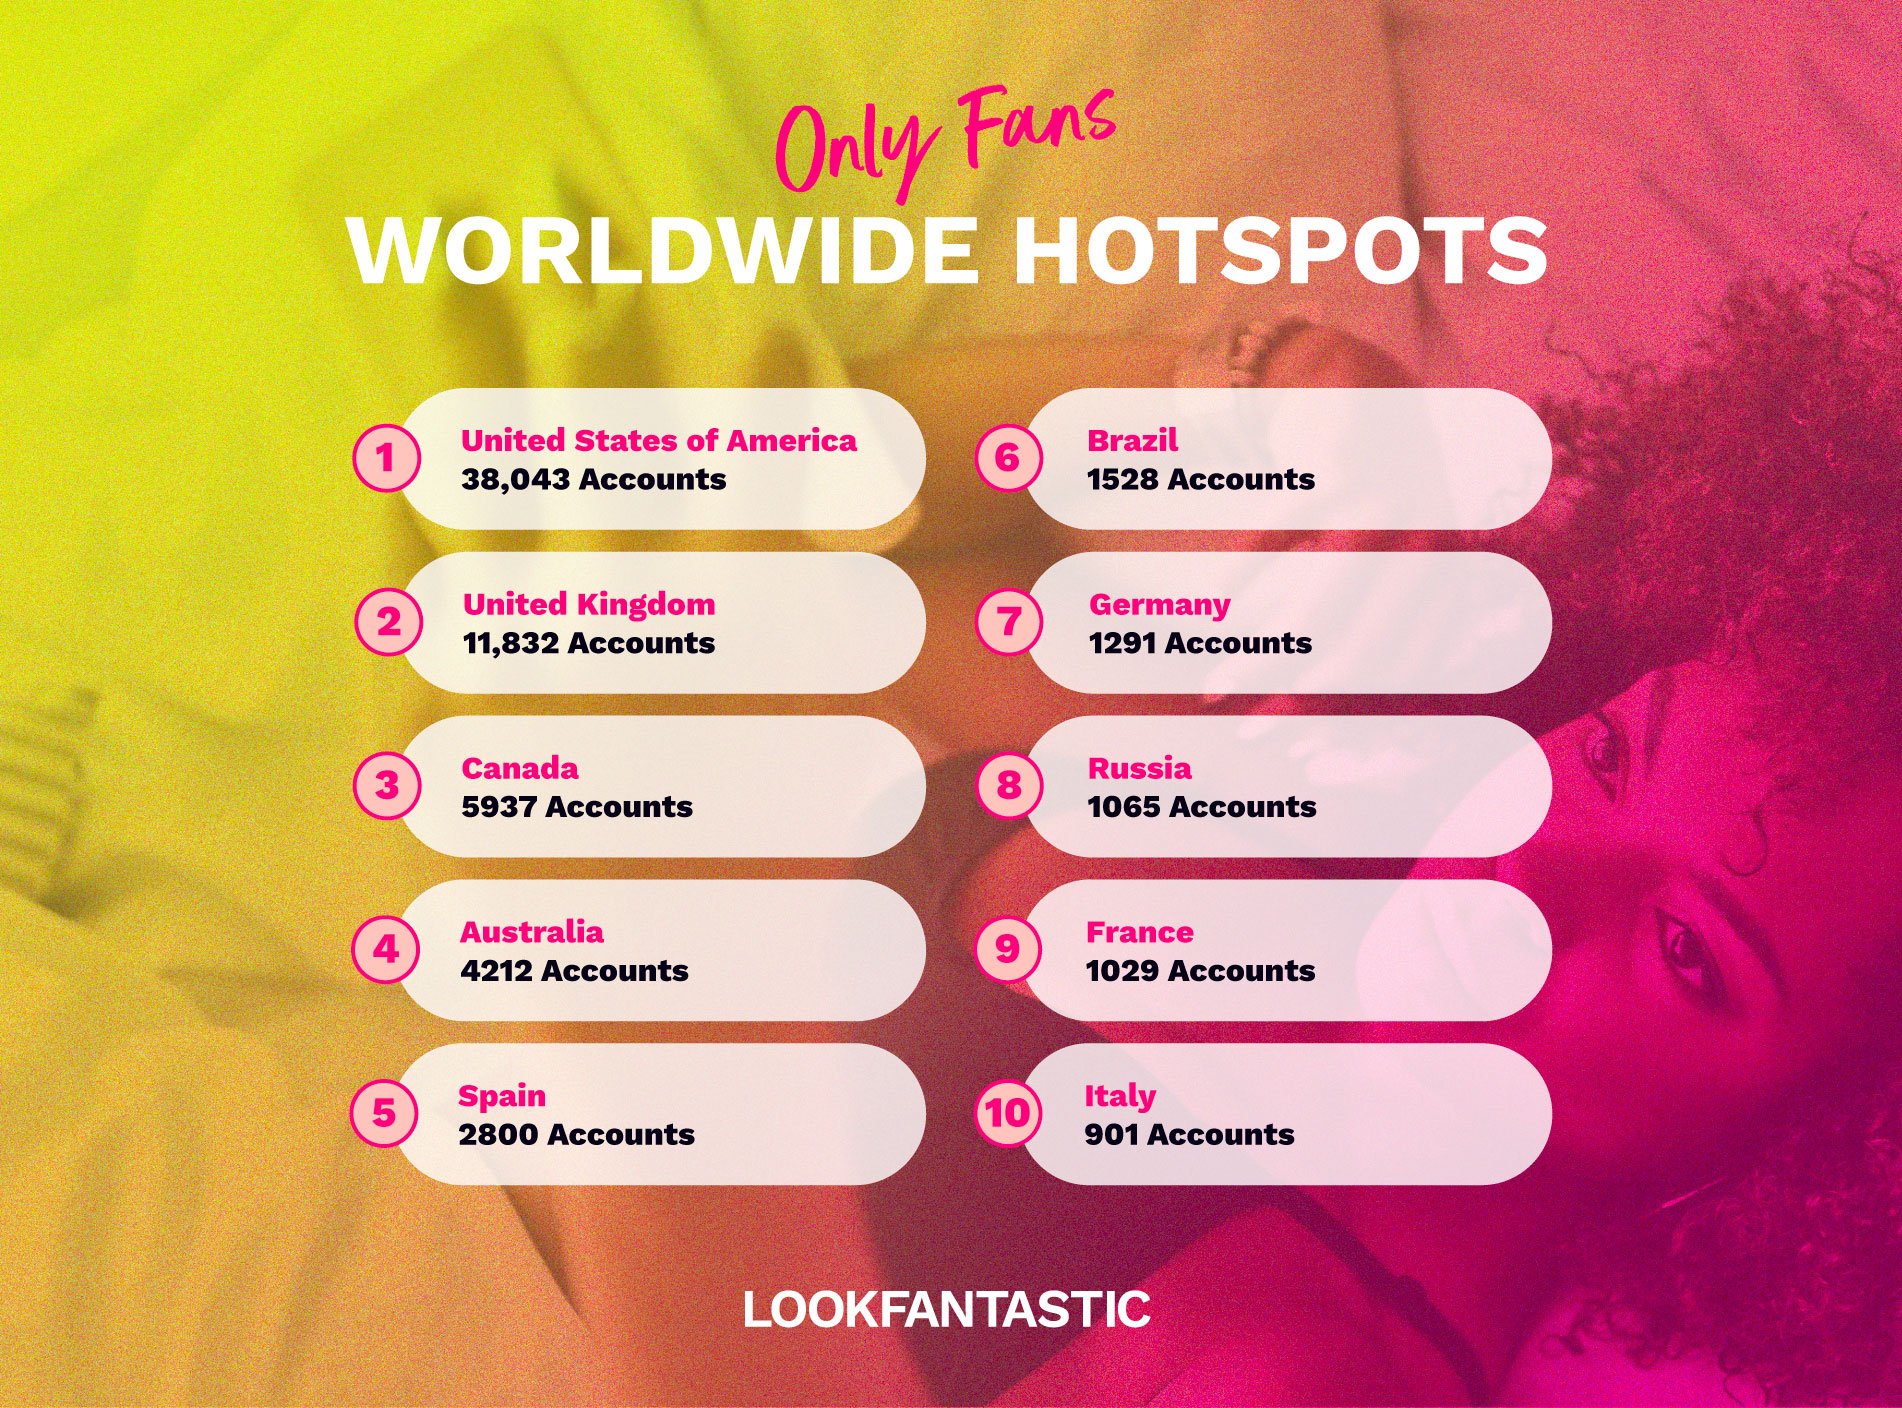 Only Fans worldwide hotspots